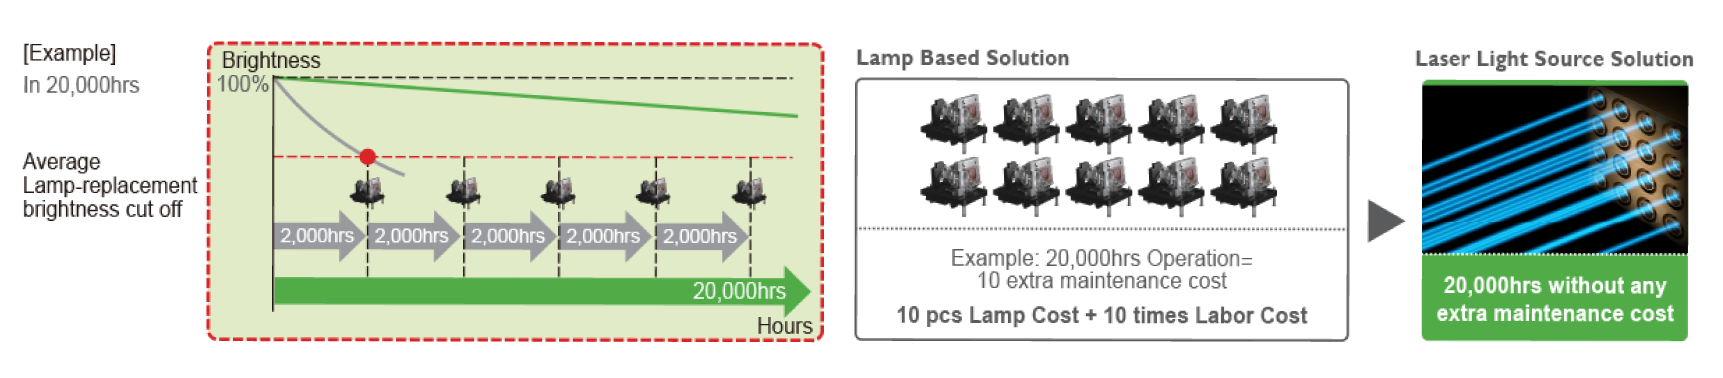 BenQ BlueCore laser projectors guarantees low maintenance cost